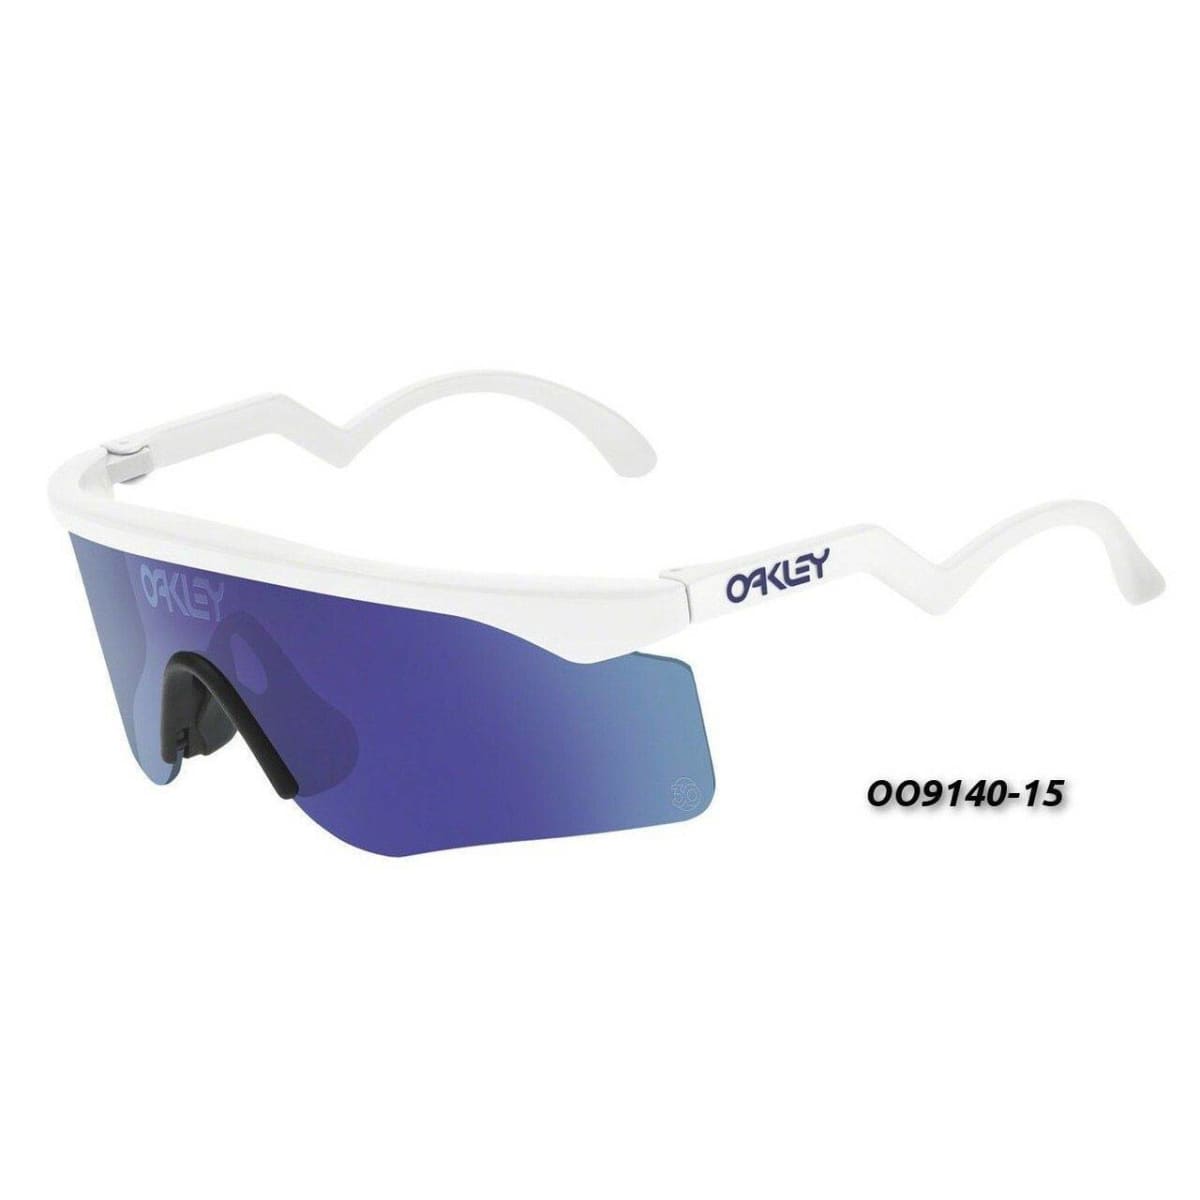 Oakley OO9140-15 Razor Blades White Sports Violet Iridium Sunglasses - Walmart.com